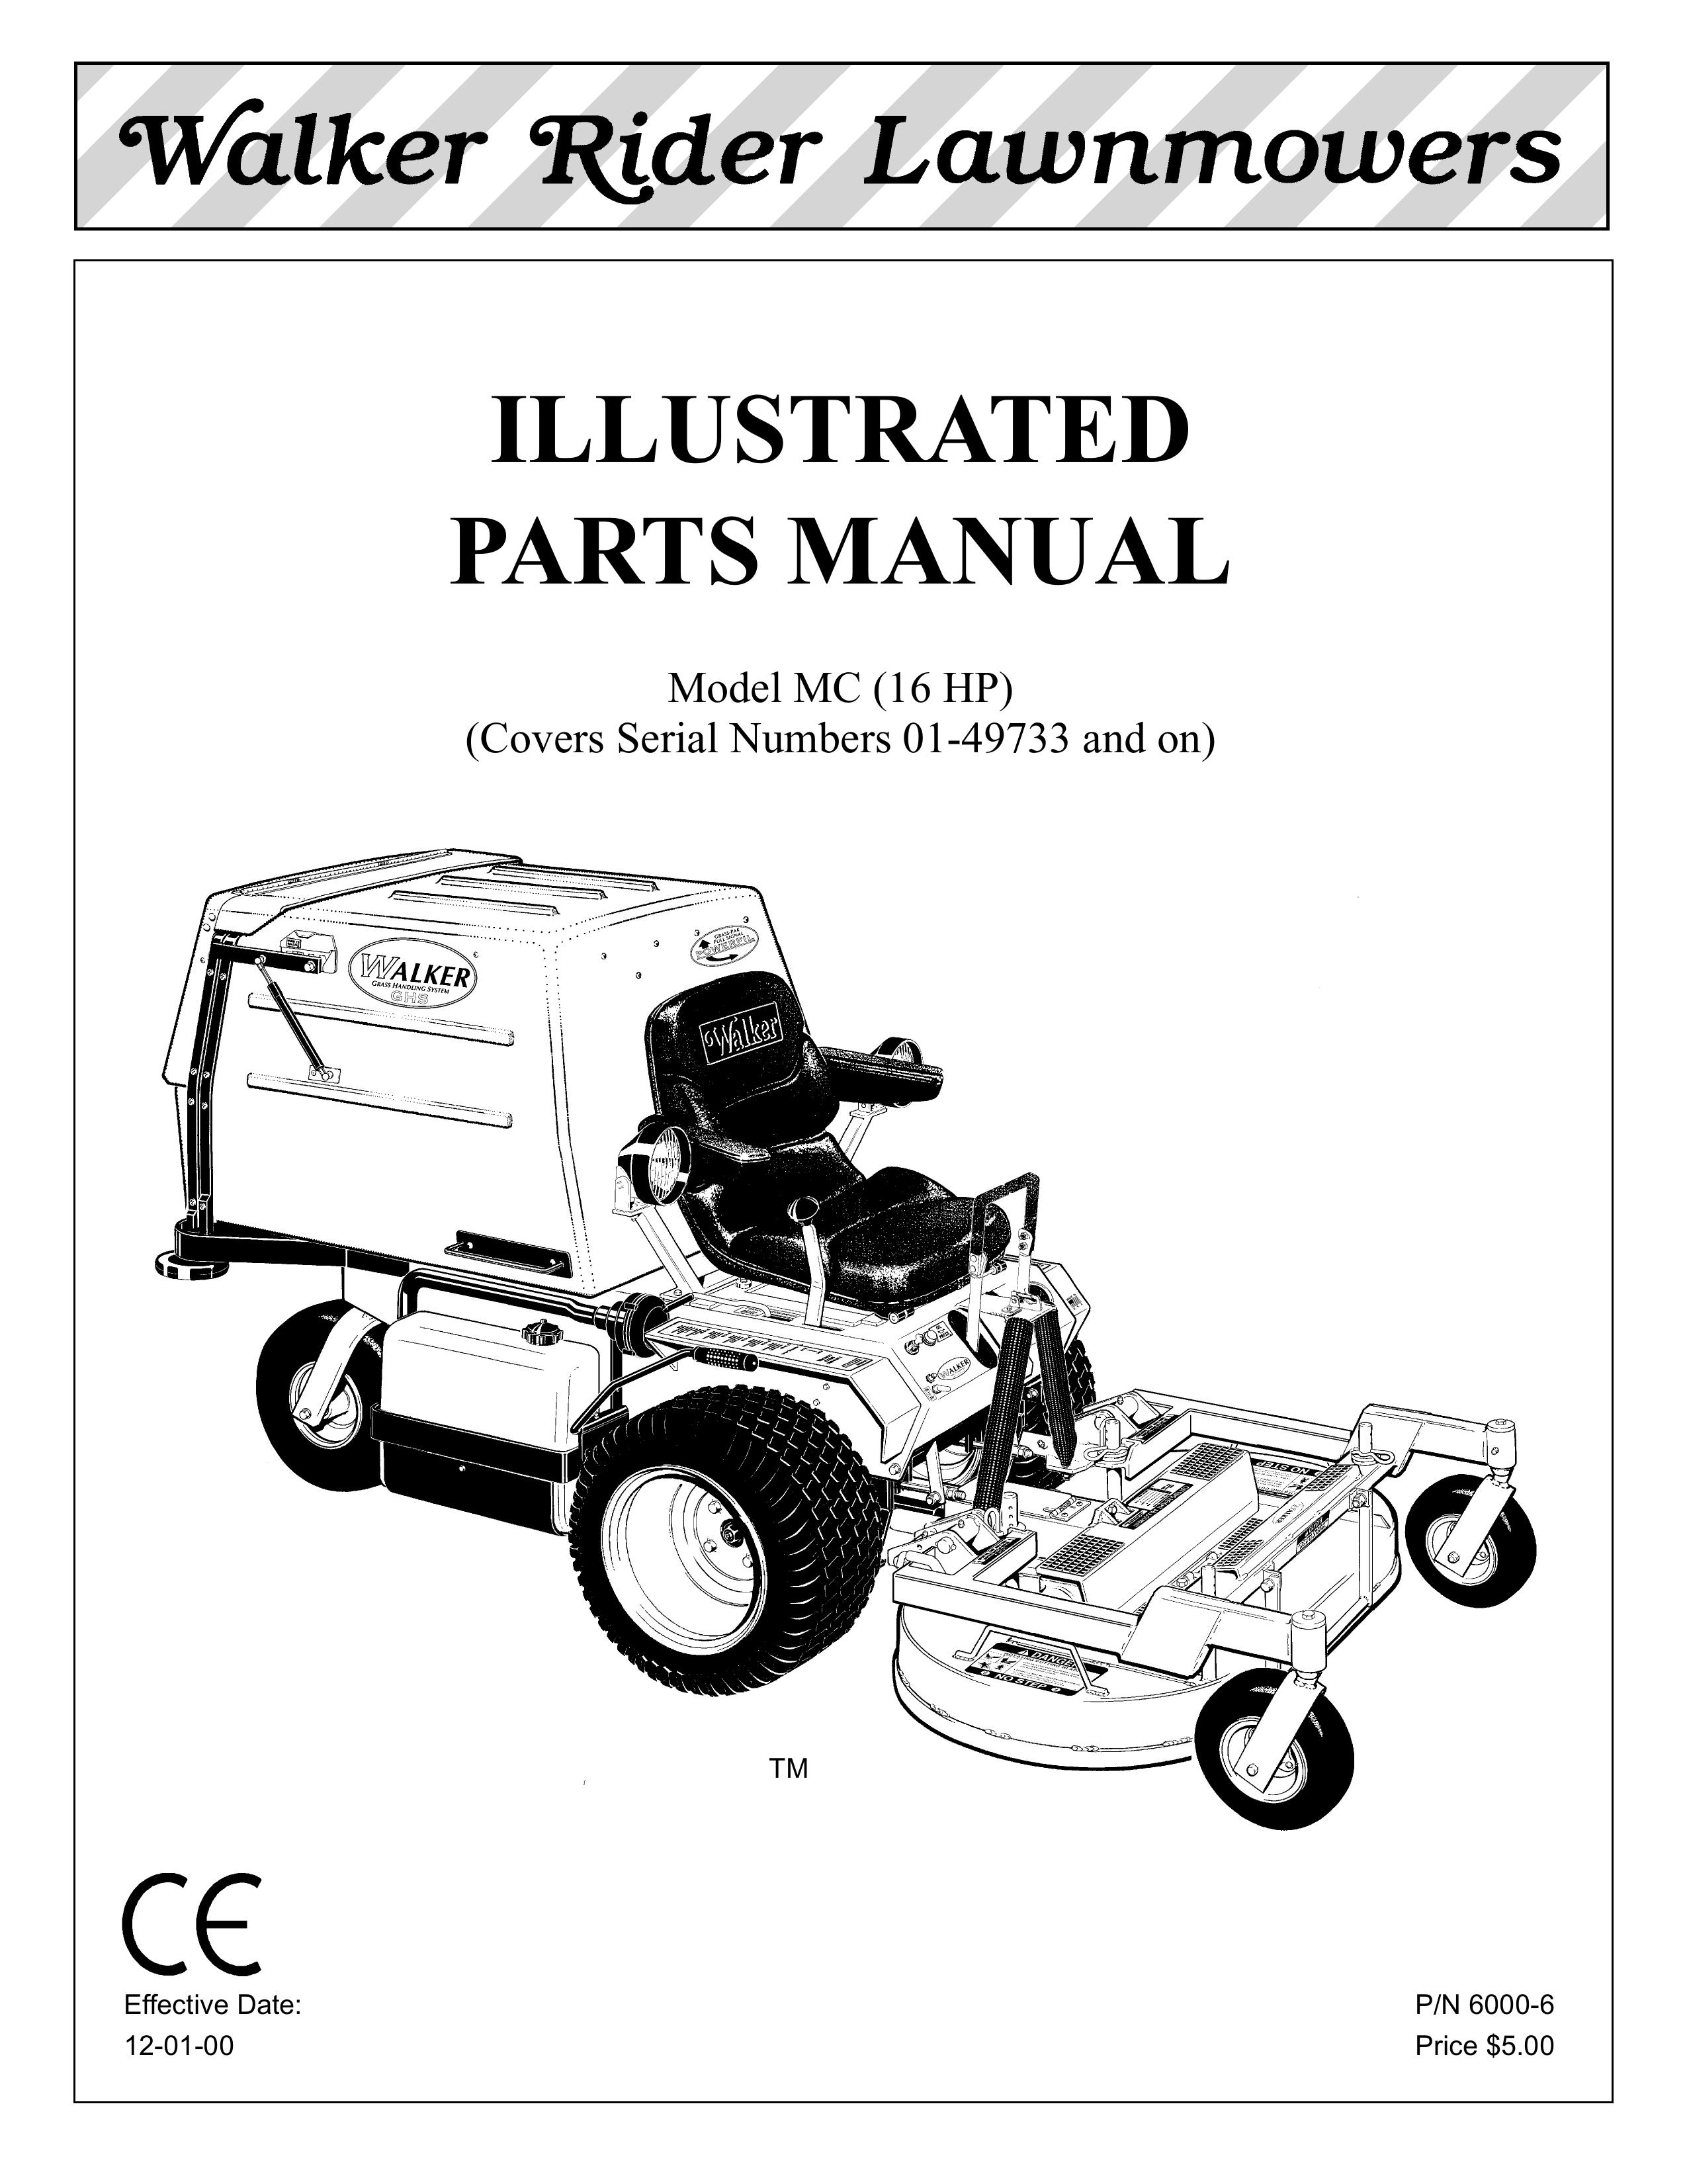 Walker MC (16 HP) Lawn Mower User Manual